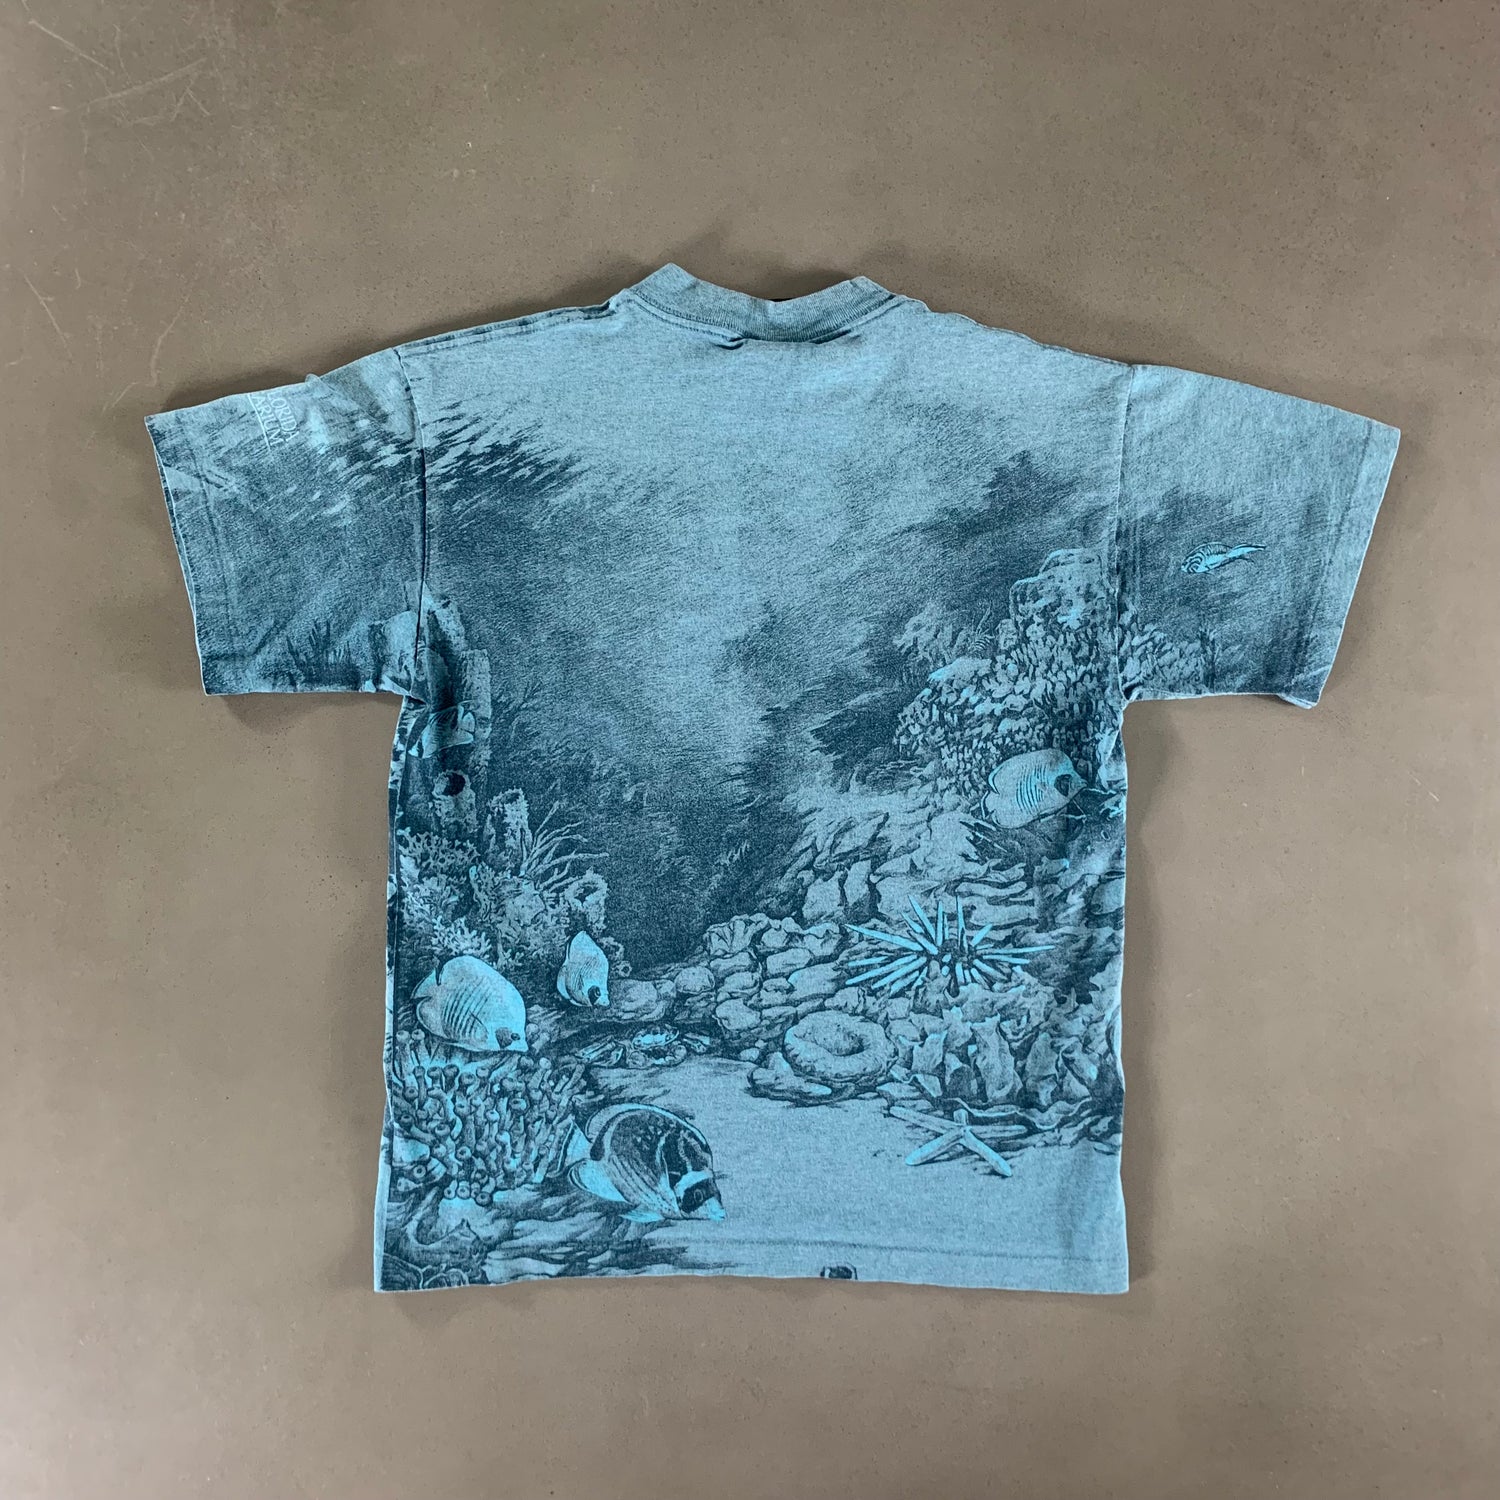 Vintage 1994 Fish T-shirt size Medium